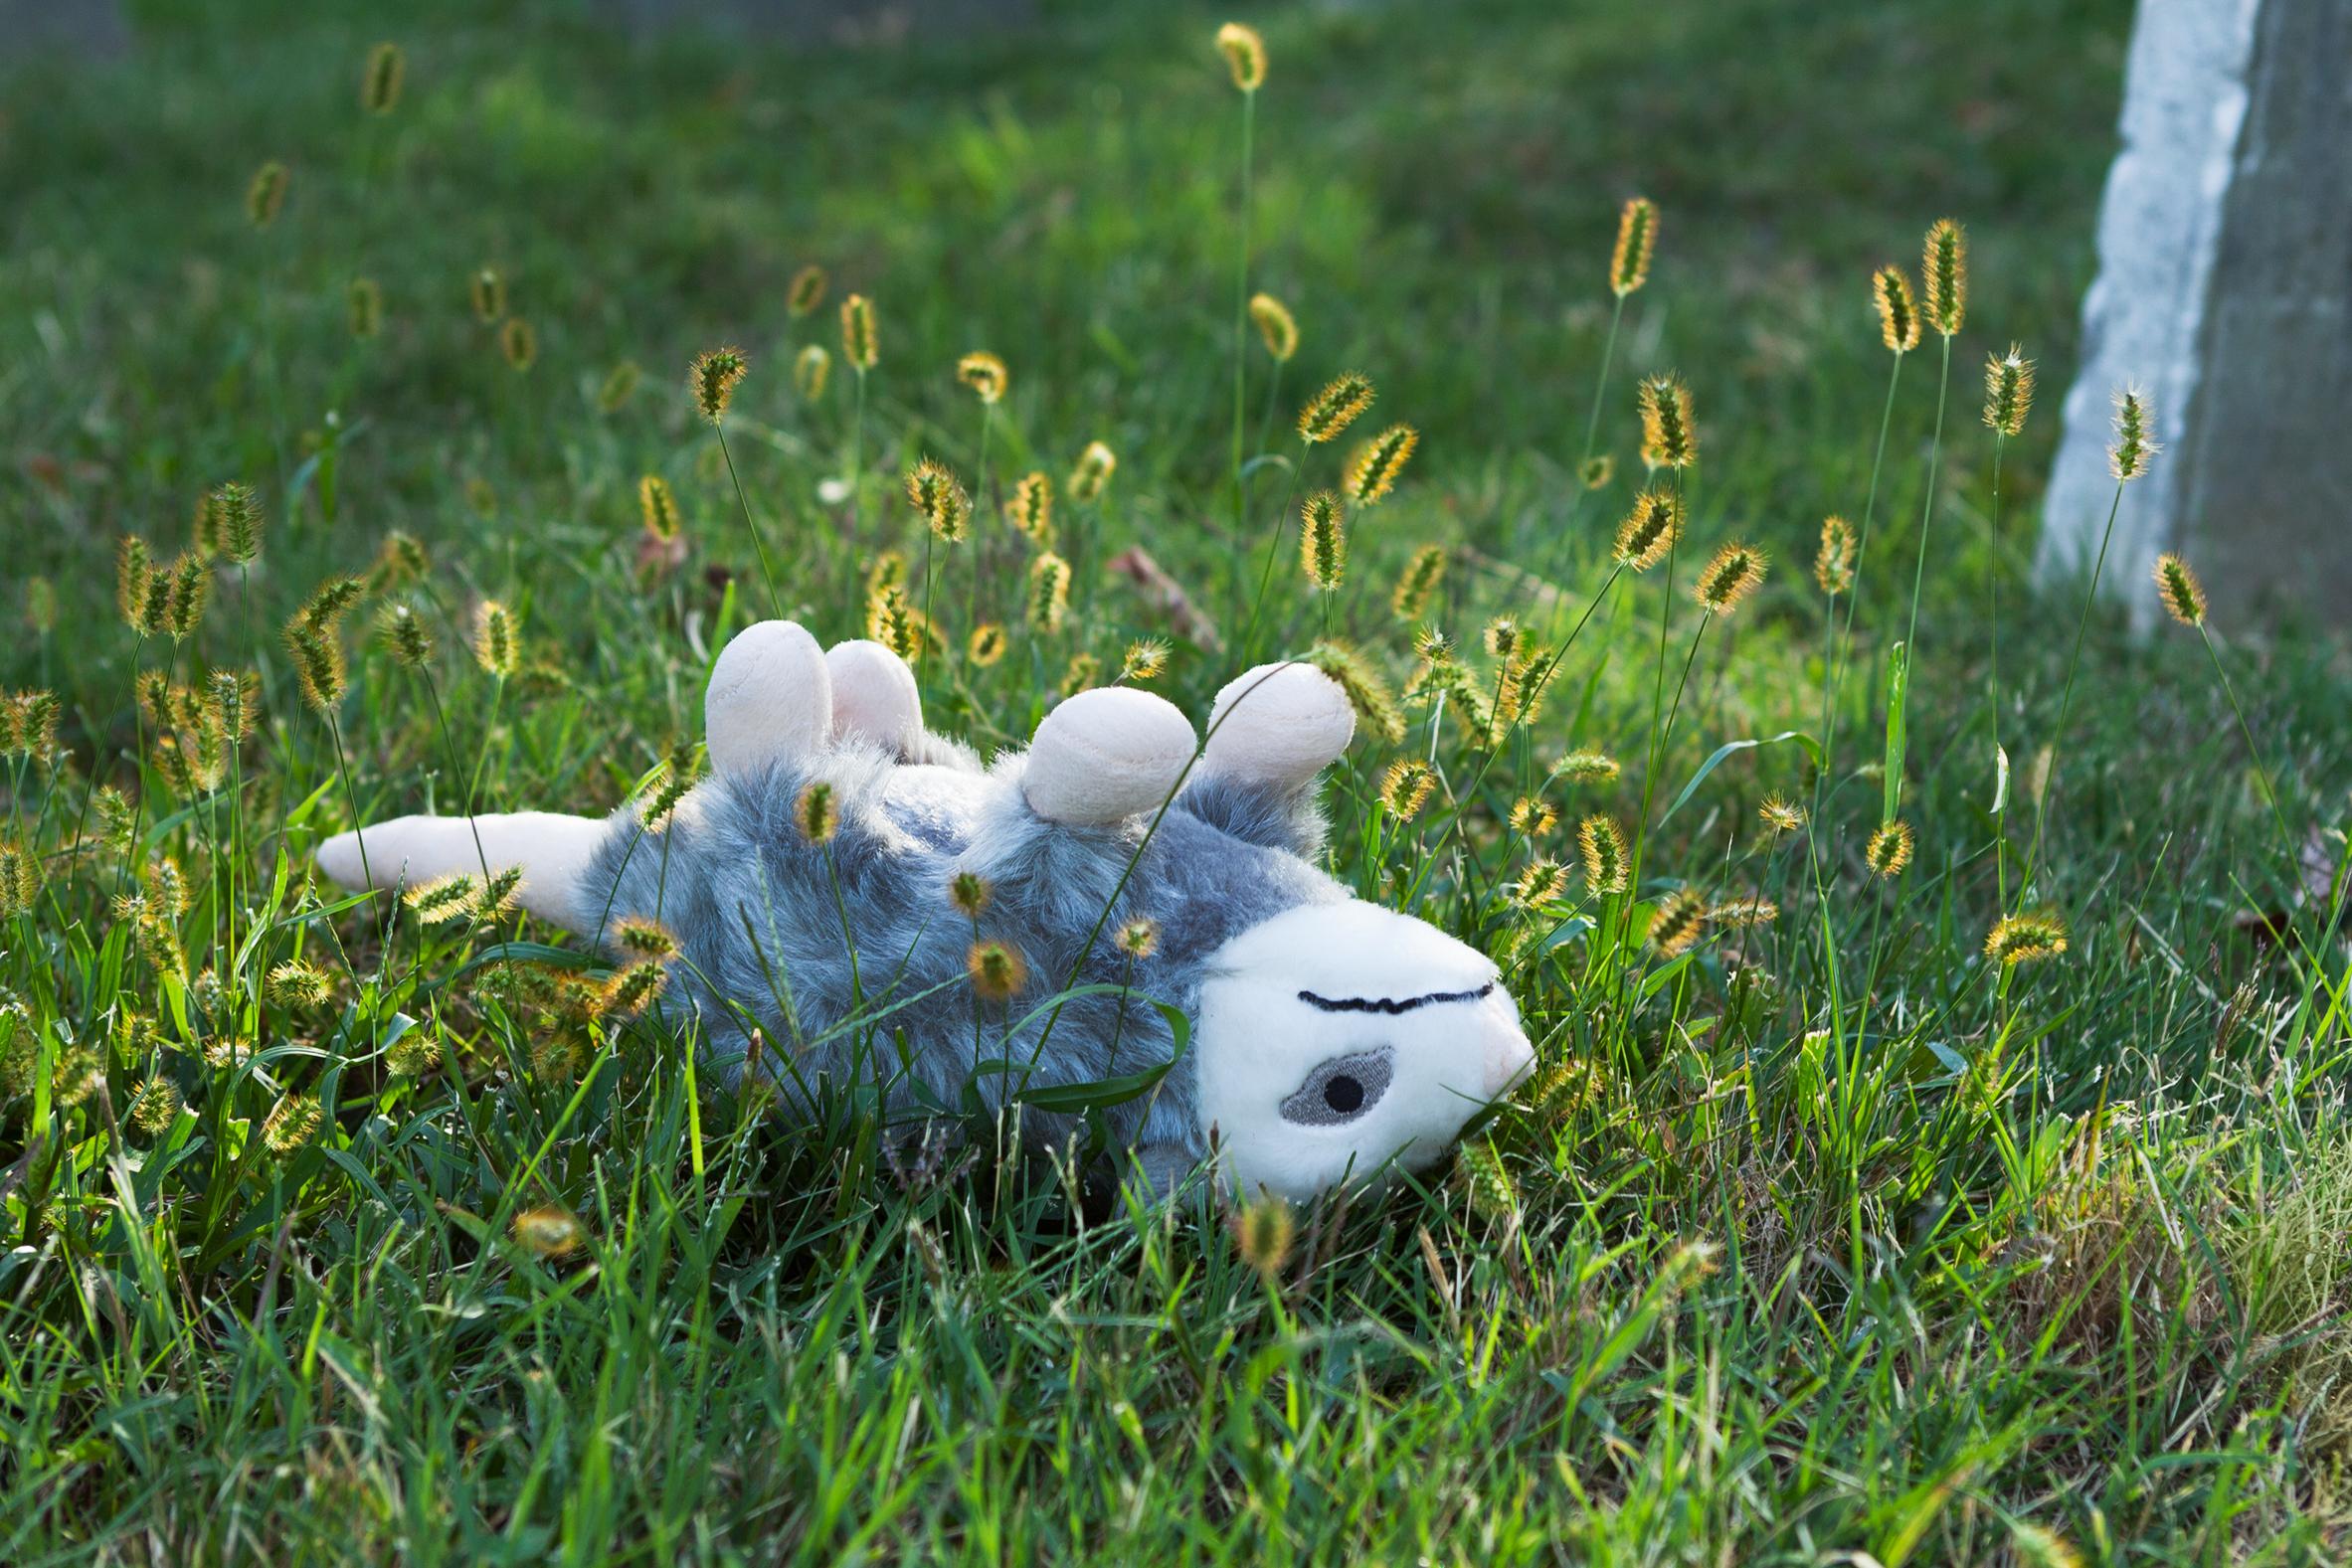 Morbidity & Mortality: Opossum Humorvolle Fotografie eines Hundespielzeugs in Krimsszene  – Print von Jeanette May